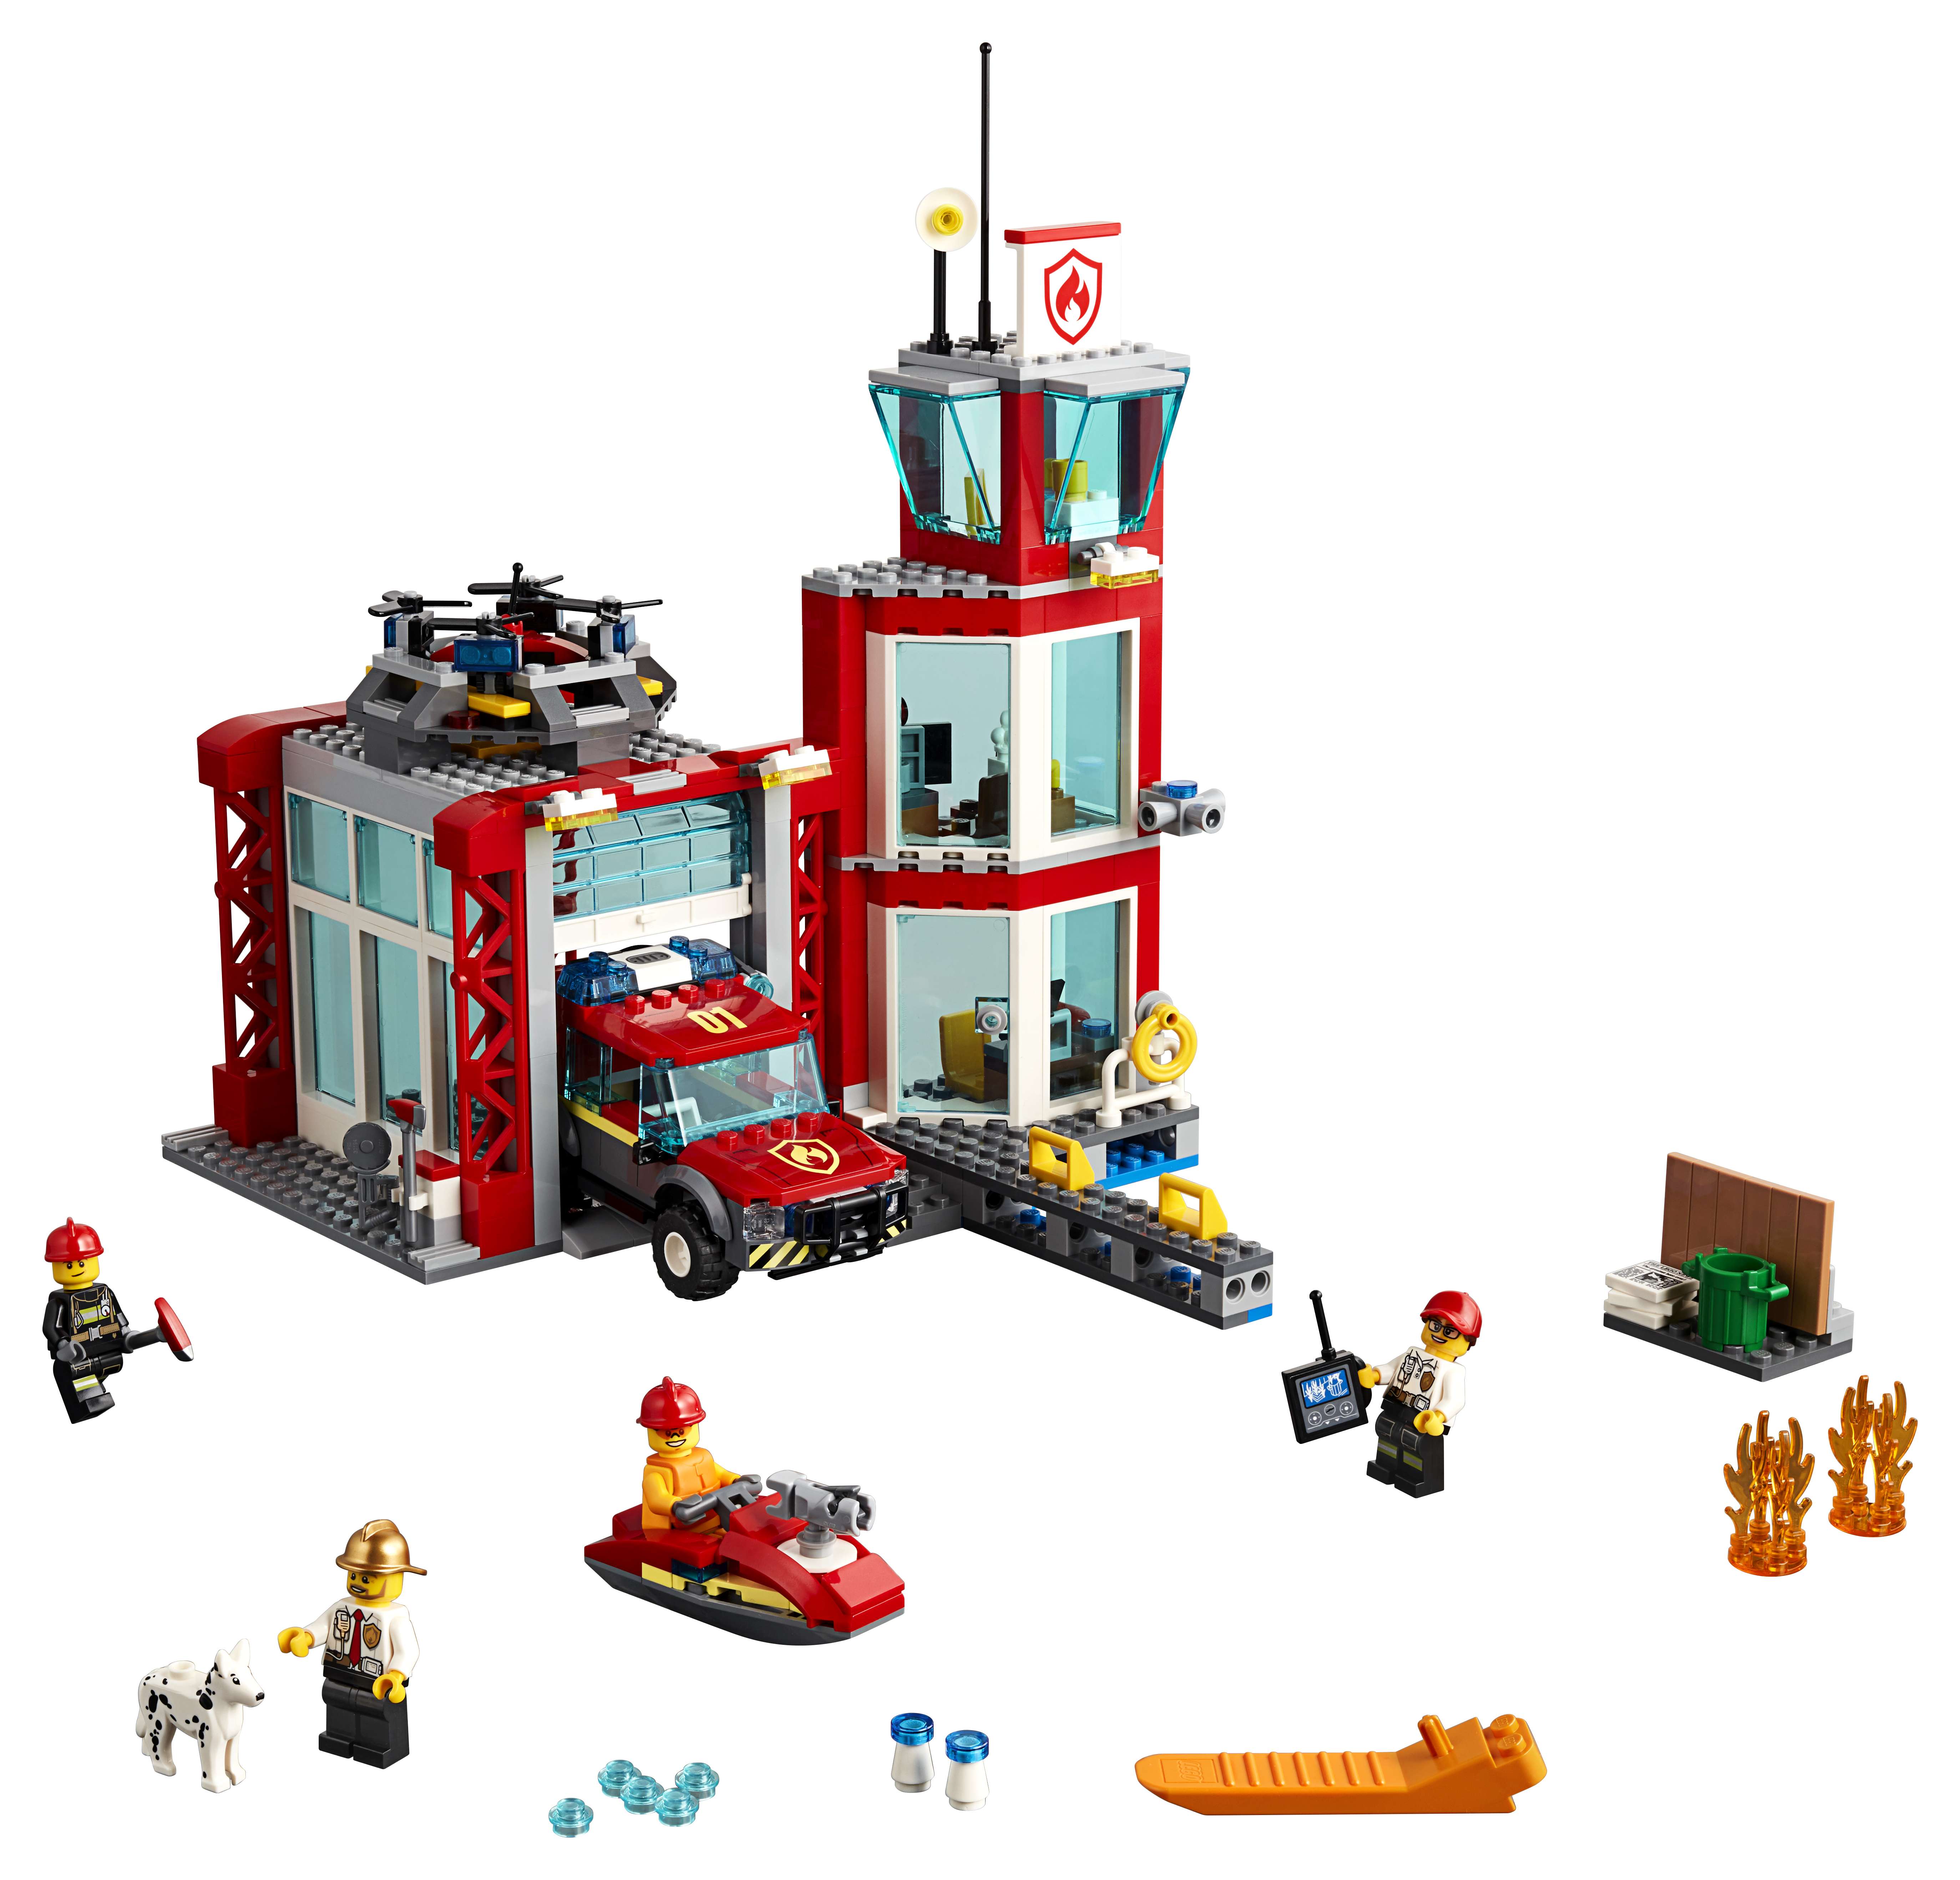 LEGO City - Fire Station (60215)